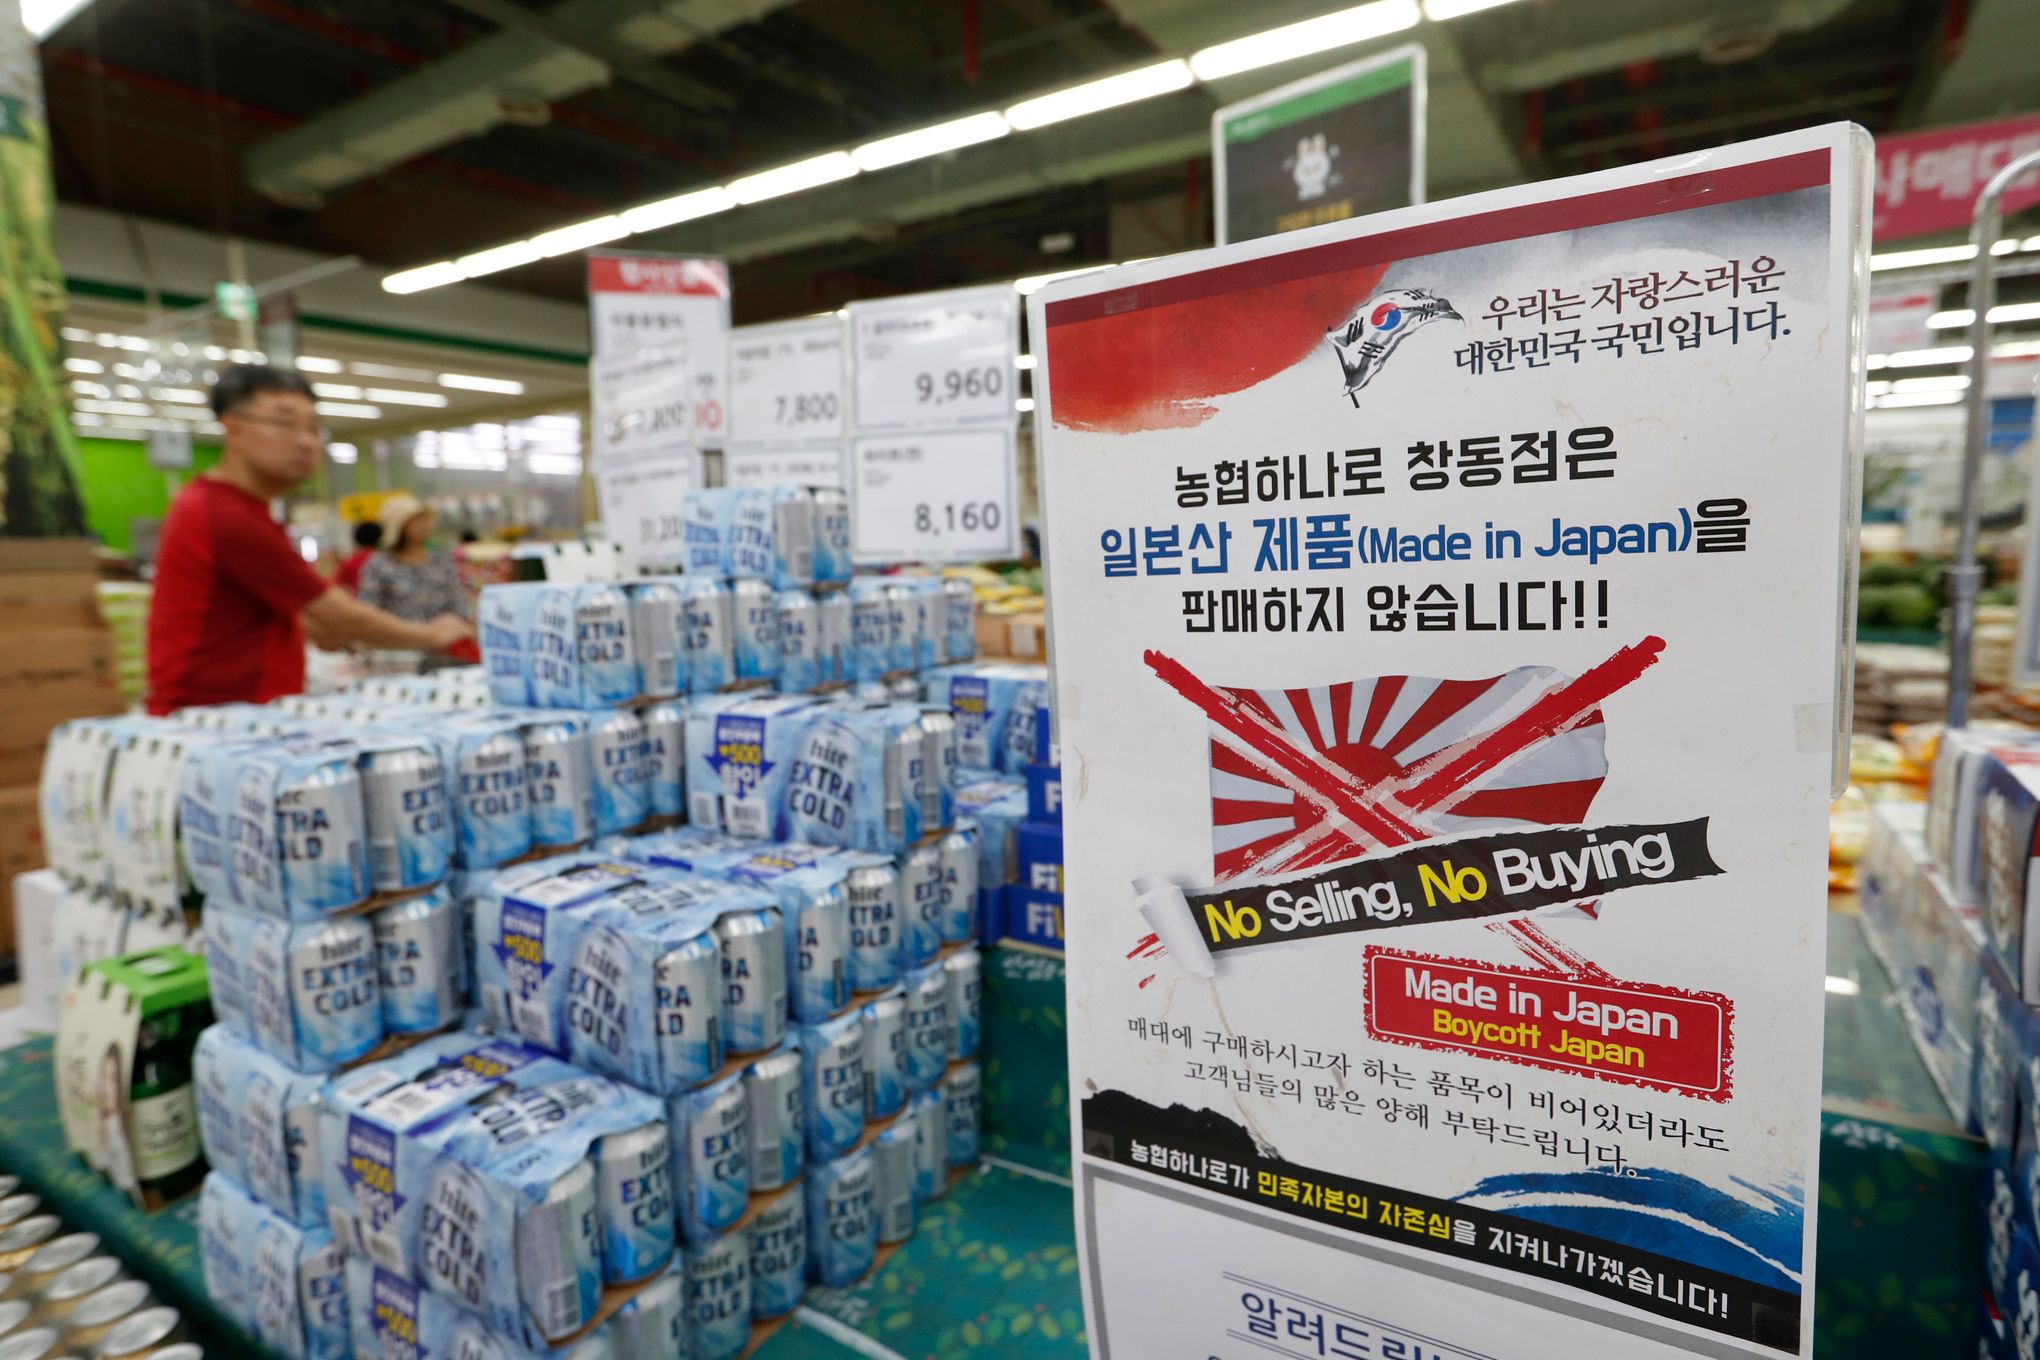 Korea boycott affected Uniqlo sales, Japan's Fast Retailing says